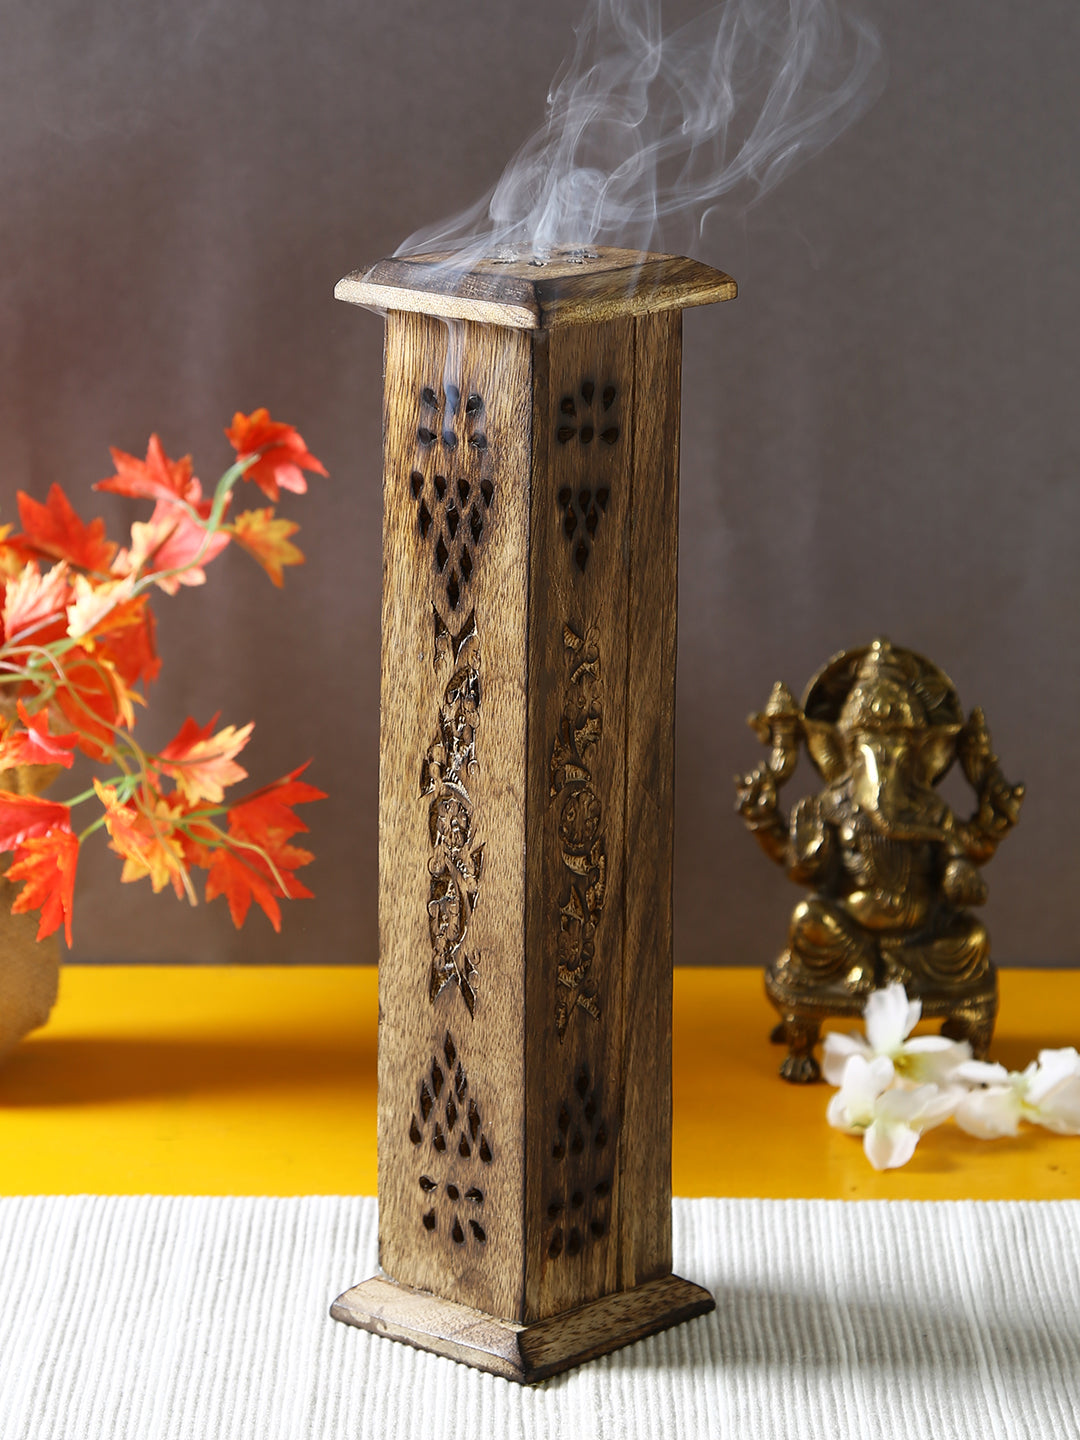 Hosley® Wooden Incense Holder with a Bonus of 20 Highly Frangranced Incense Sticks